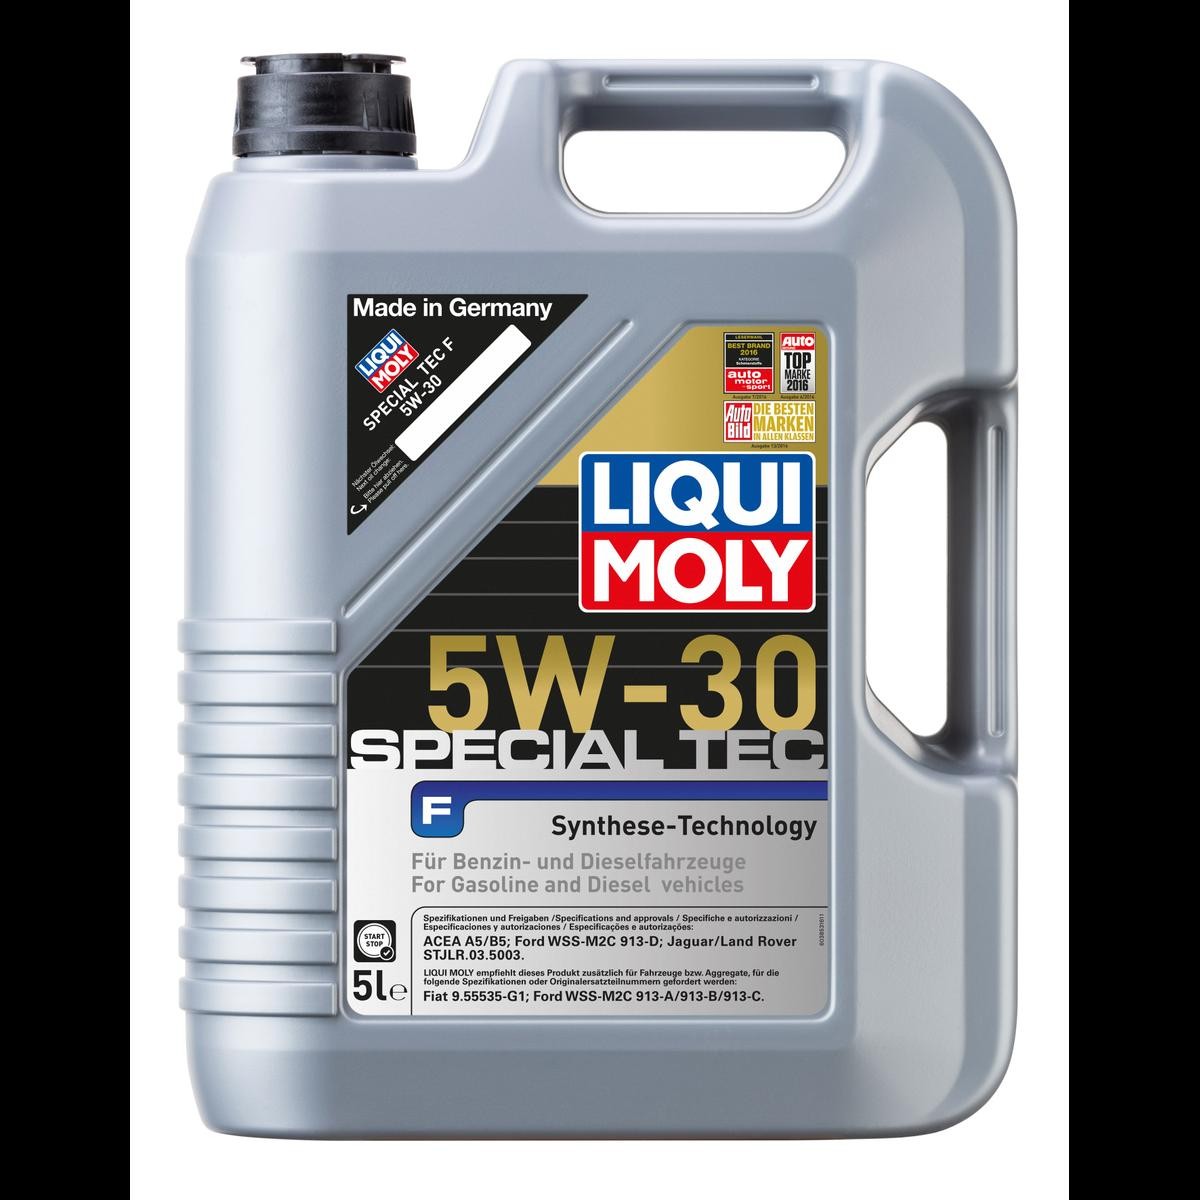 LIQUI MOLY Special Tec, F 5W-30, 5L Aceite para motor 3853 comprar online